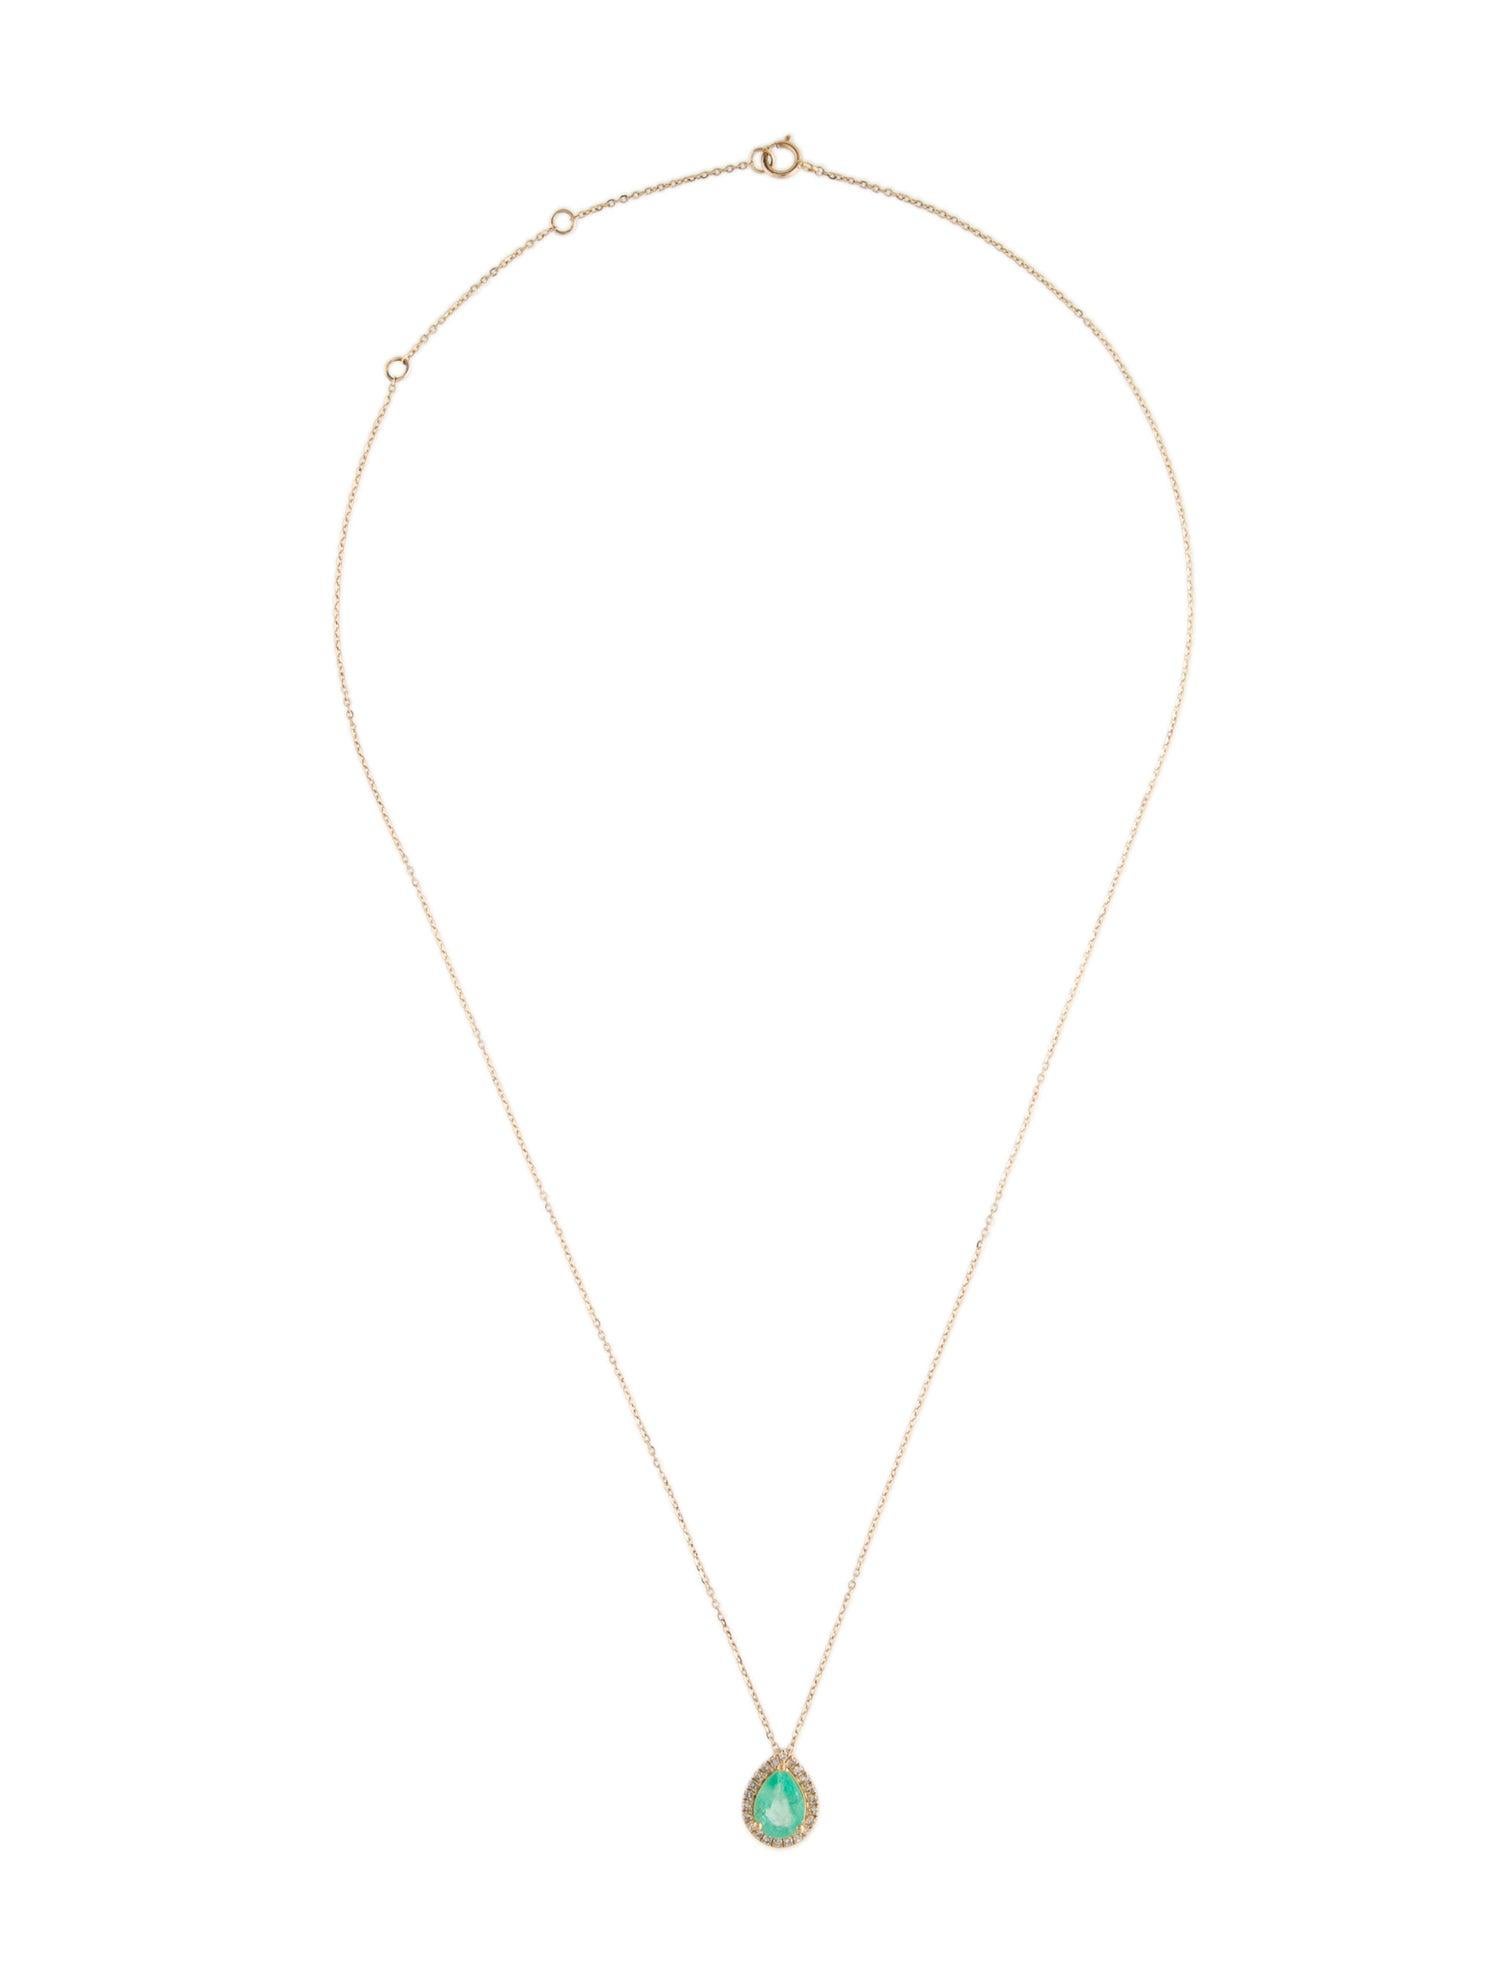 Brilliant Cut 14K Emerald & Diamond Pendant Necklace - Elegant Gemstone Statement Piece